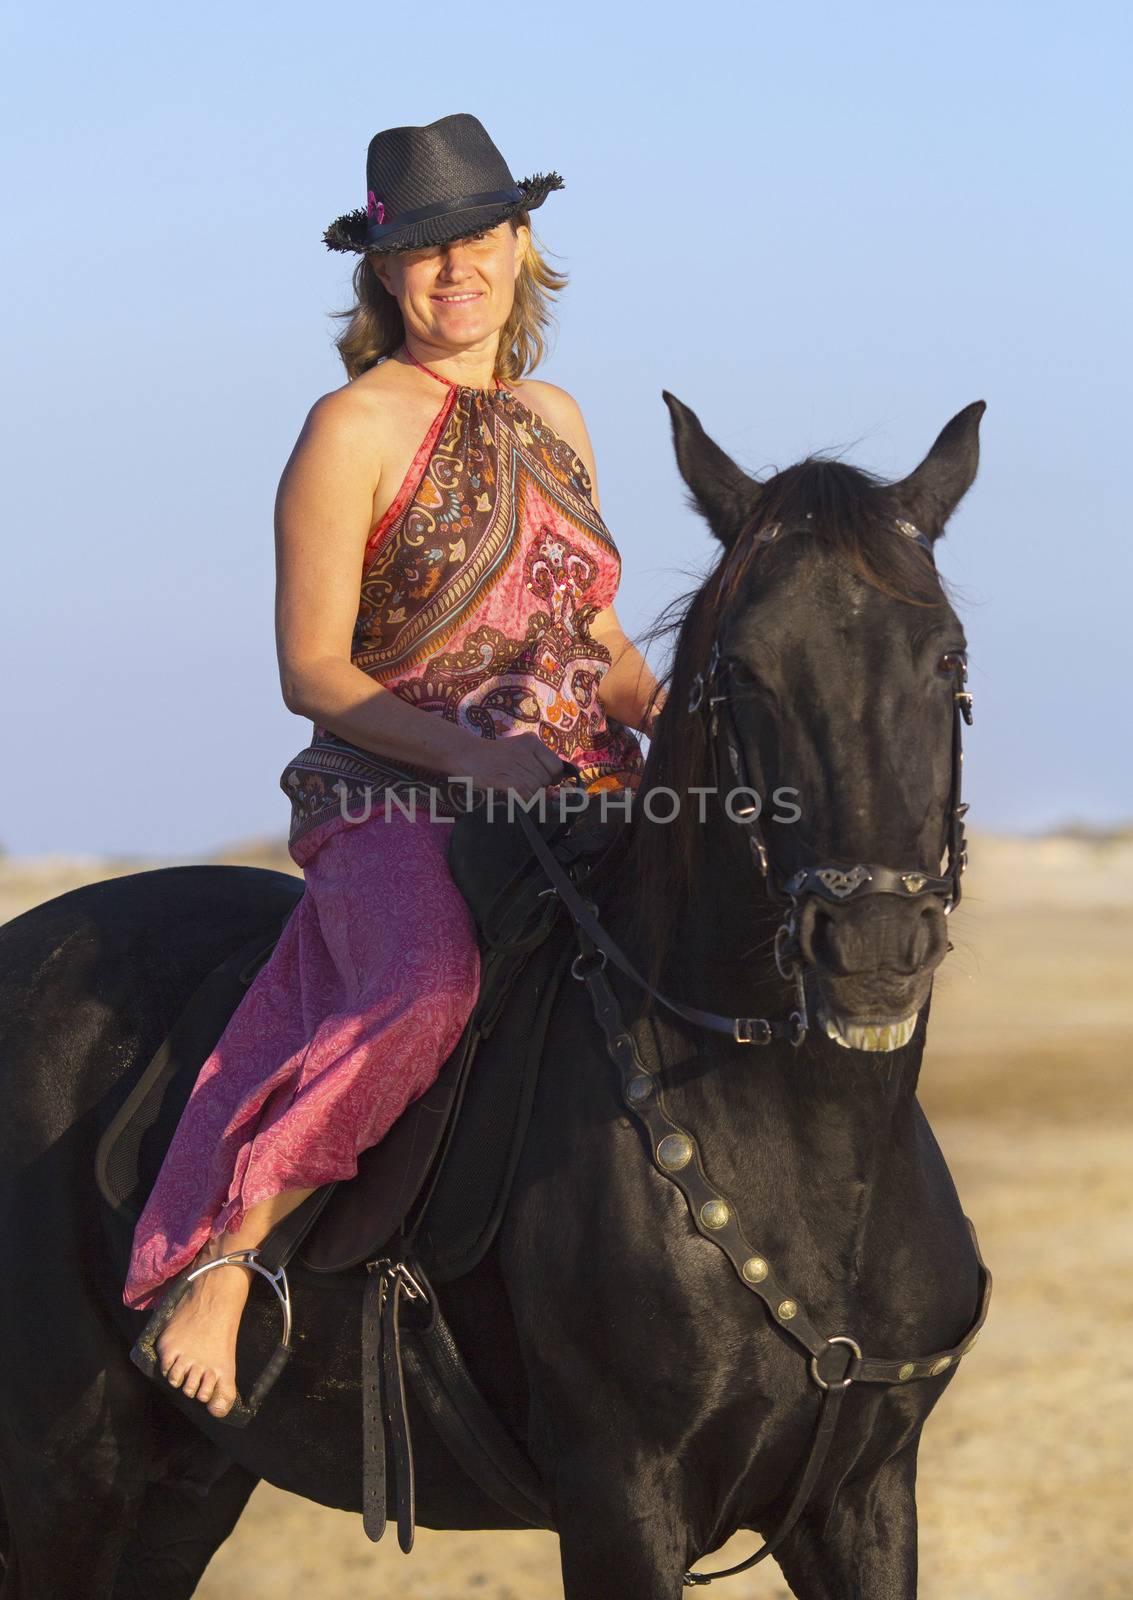 horsewoman on the beach by cynoclub